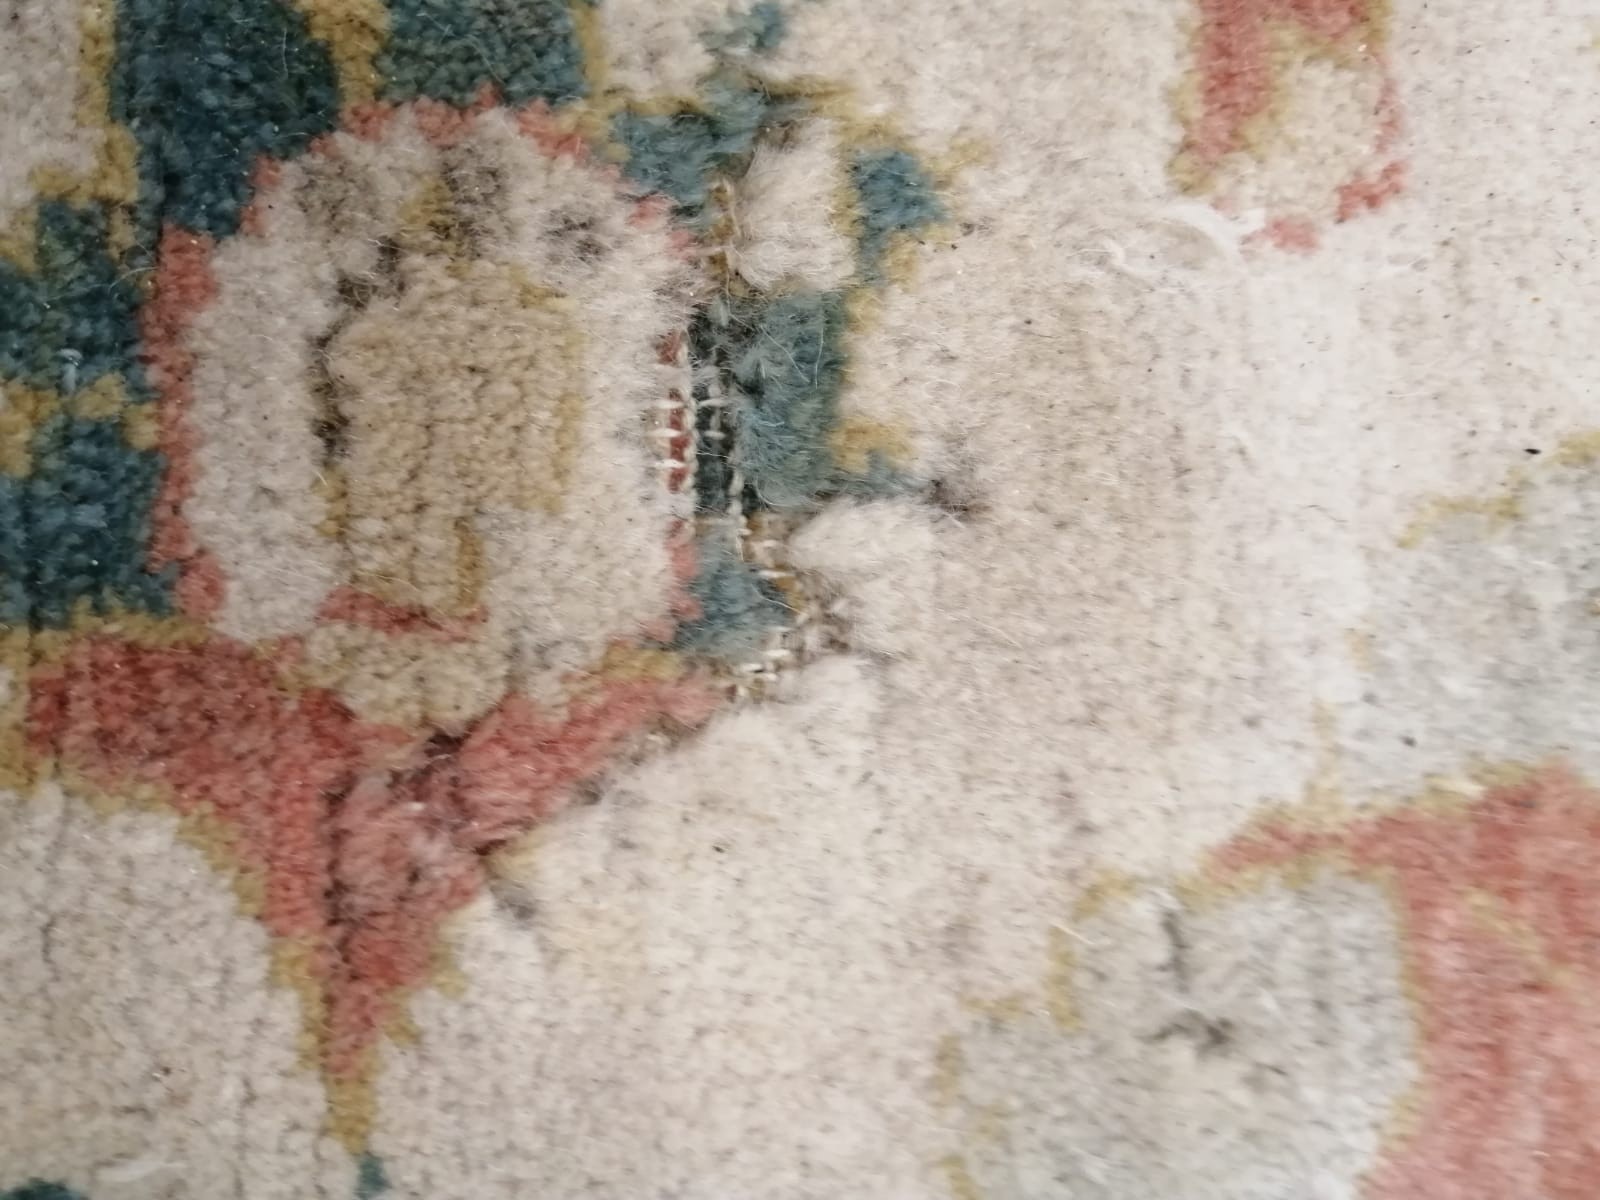 A Zeigler style ivory ground carpet, 390 x 340cm